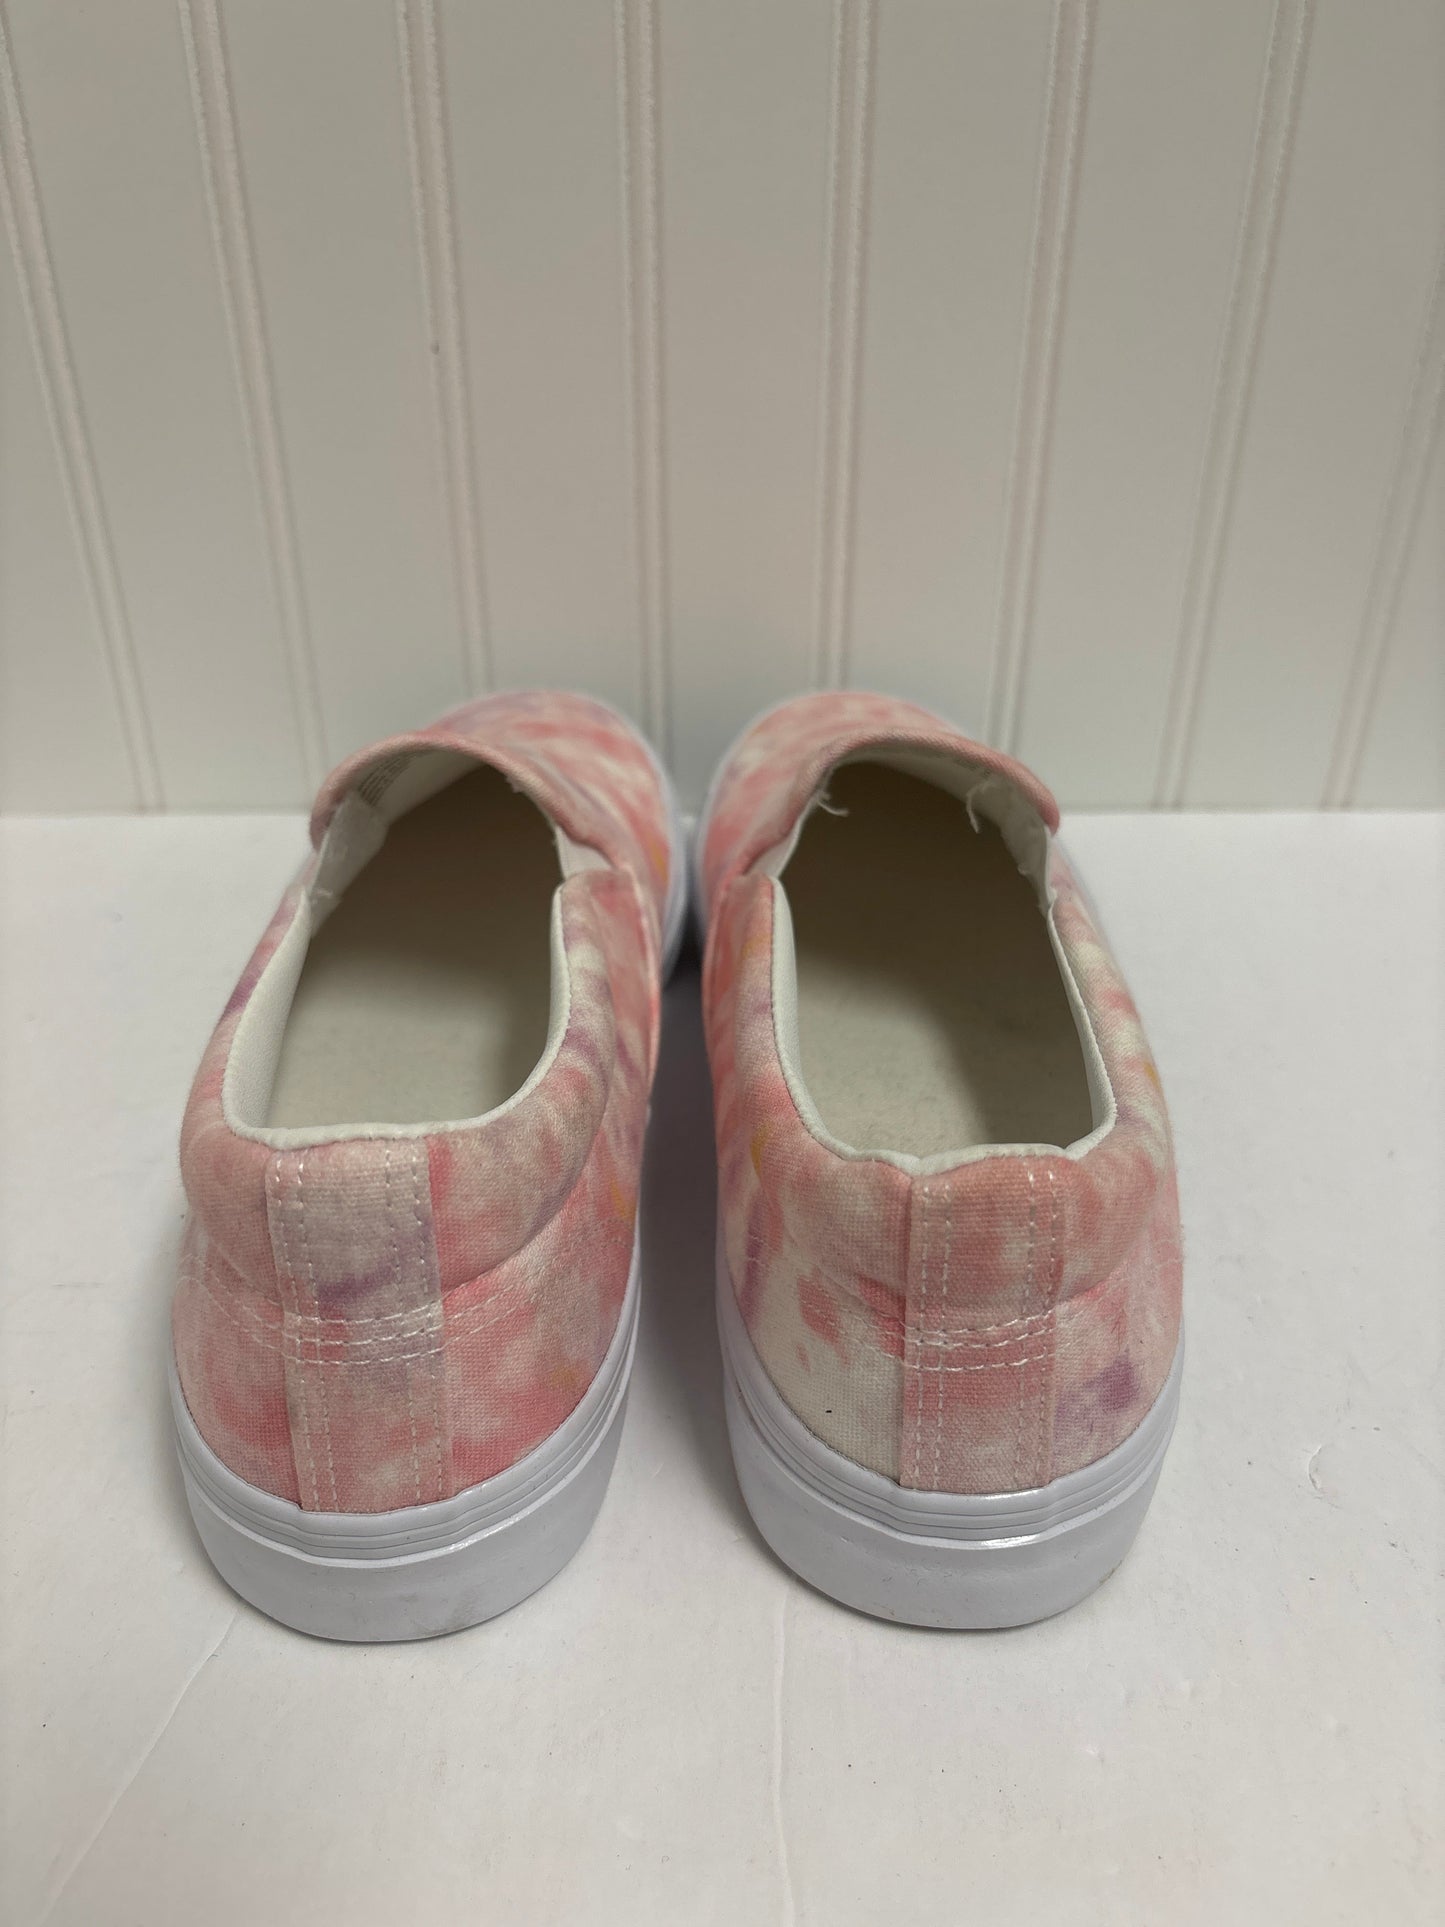 Pink & White Shoes Flats No Boundaries, Size 8.5